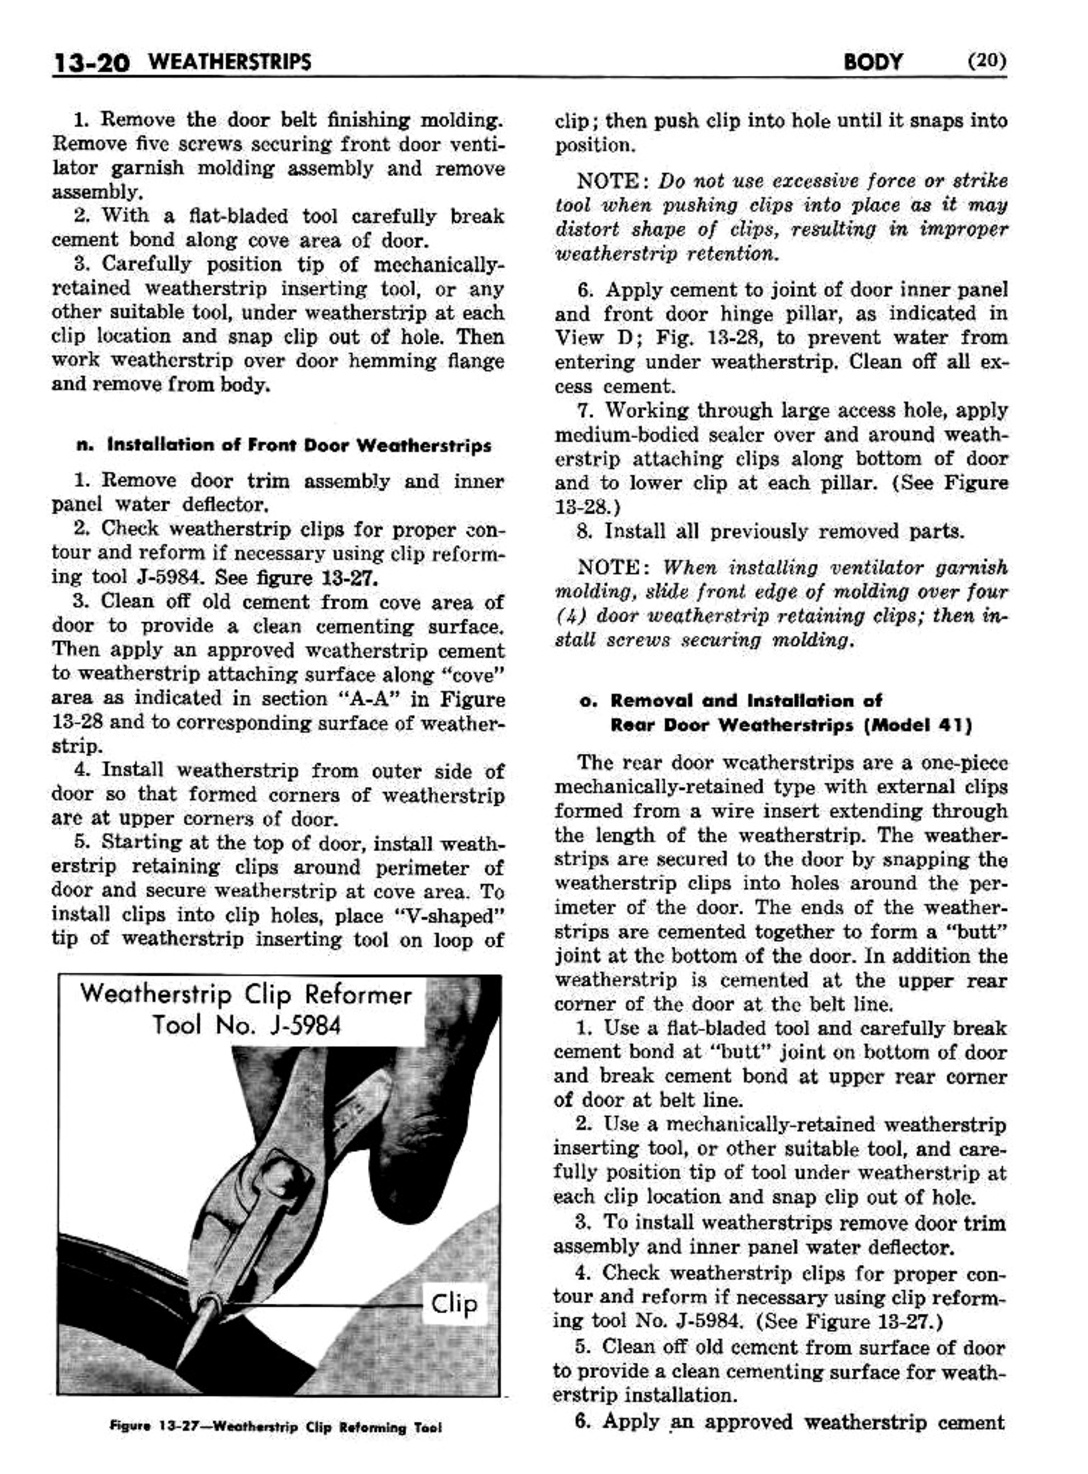 n_1958 Buick Body Service Manual-021-021.jpg